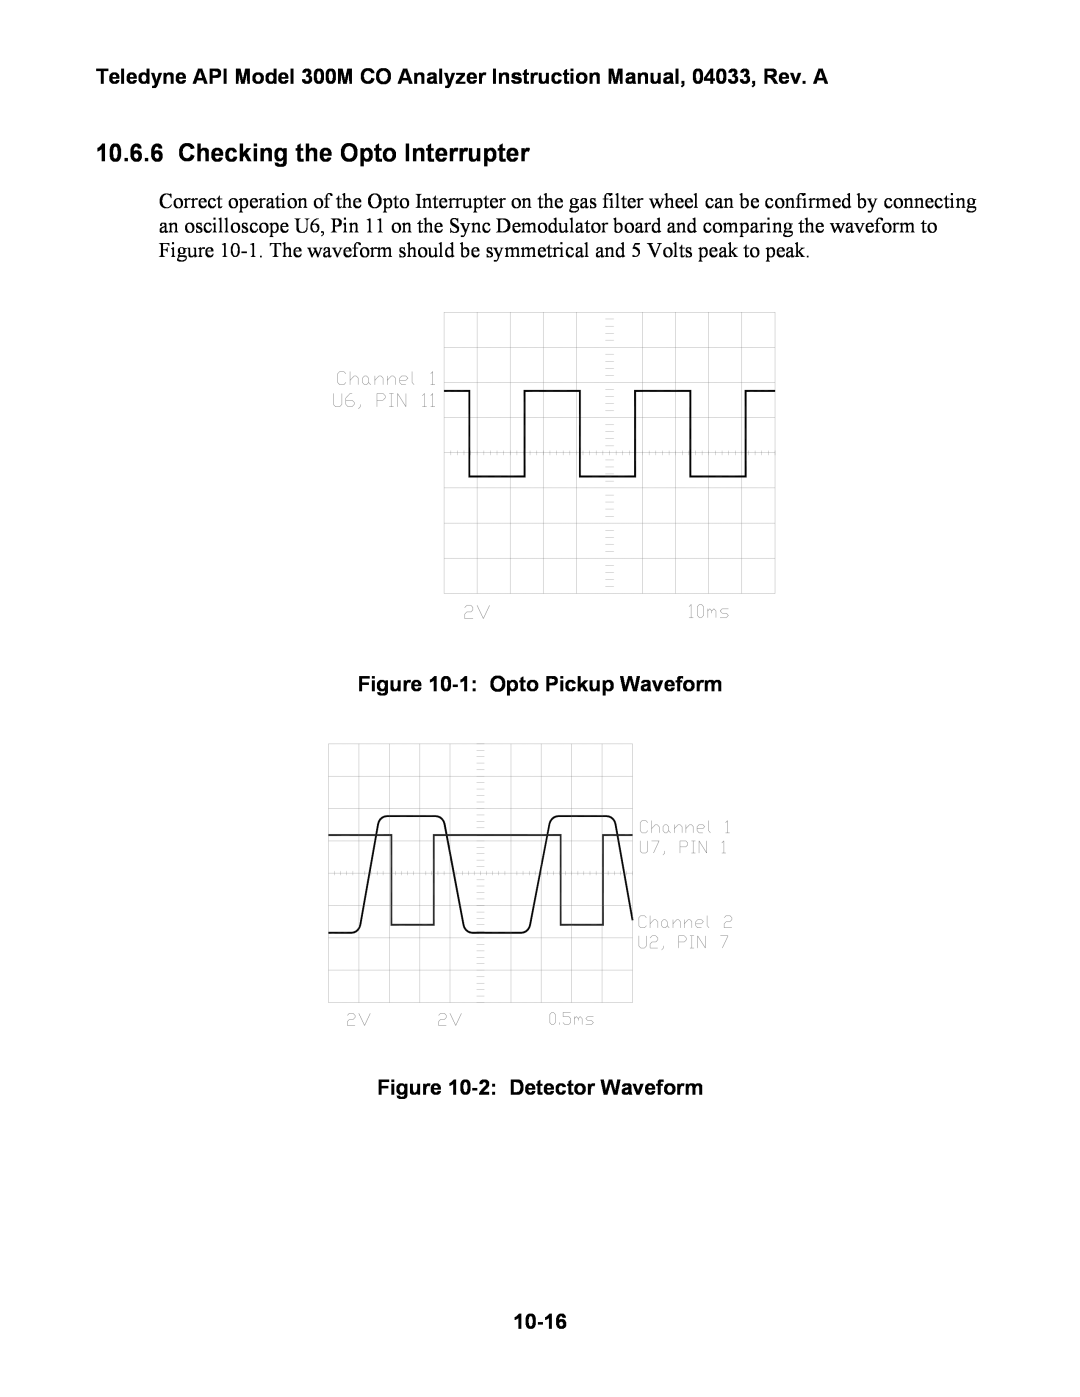 Teledyne 300M instruction manual Checking the Opto Interrupter, 1 Opto Pickup Waveform, 2 Detector Waveform, 10-16 